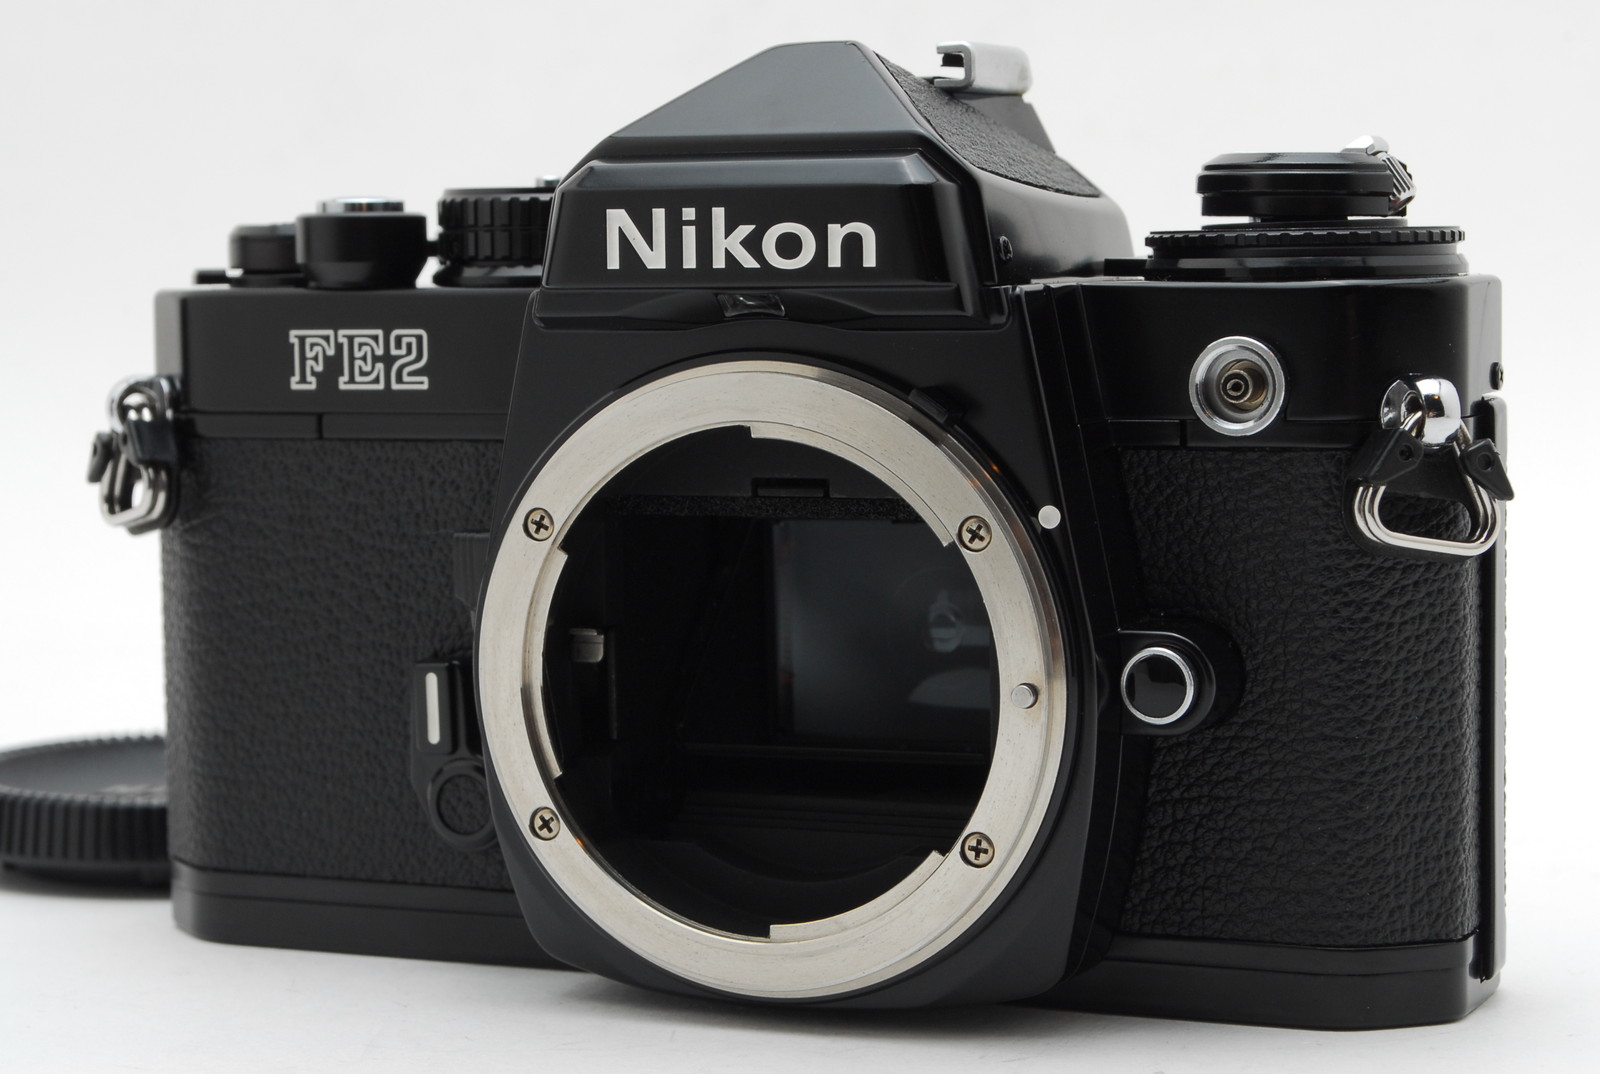 PROMOTION. NEAR MINT Nikon FE2 Black Body 35mm Film Camera SLR, Body Cap from Japan